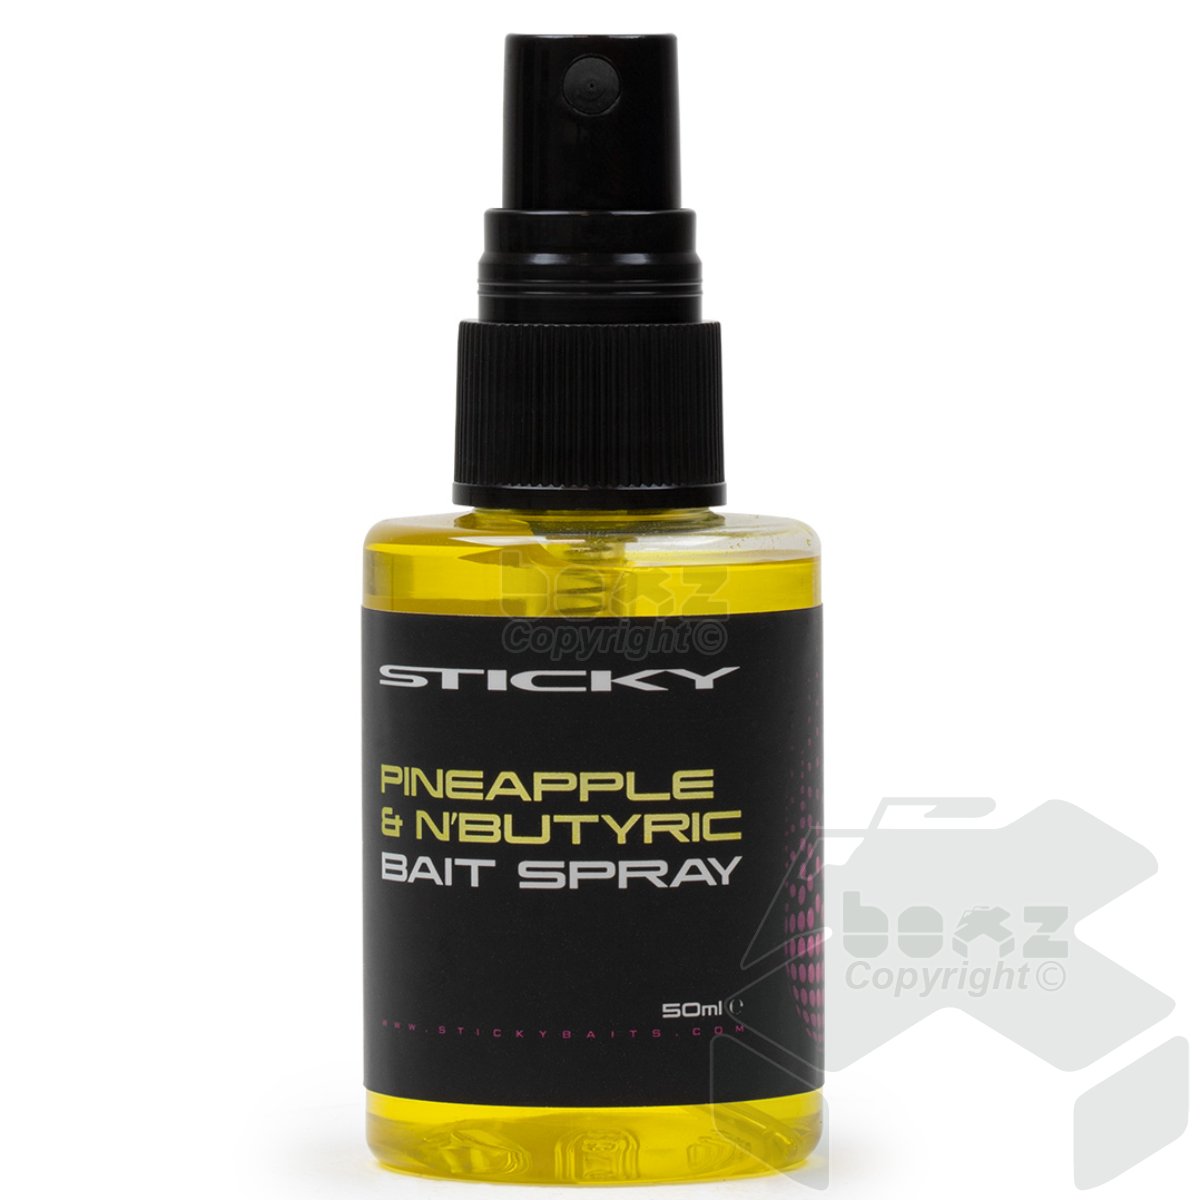 Sticky Pineapple & N'Butyric Bait Spray 50ml